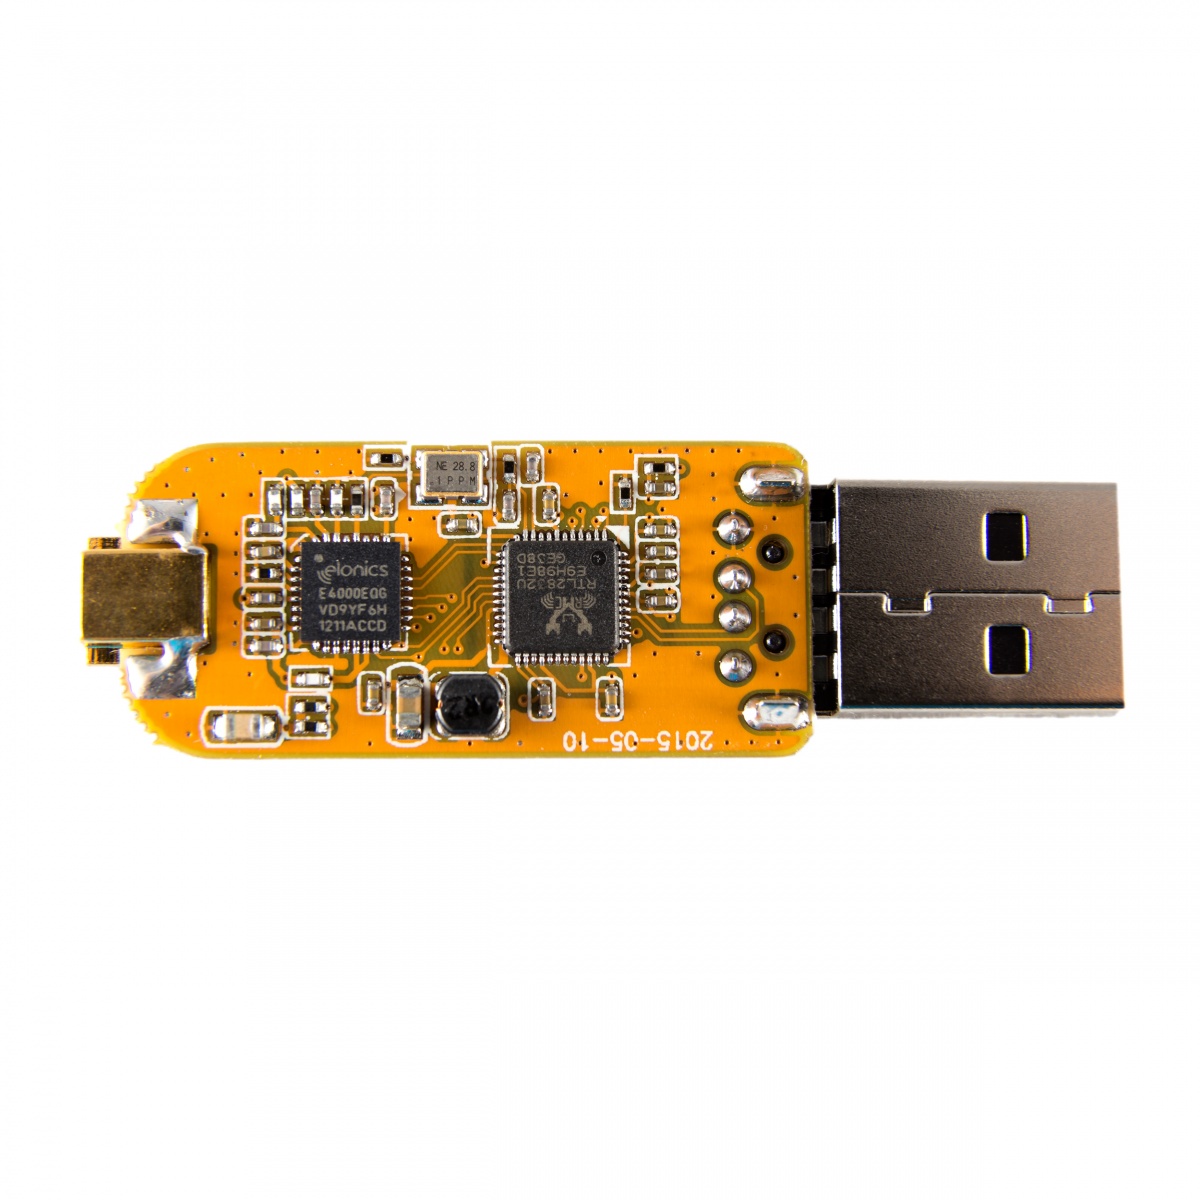 SDR USB Dongle - TXAdvance